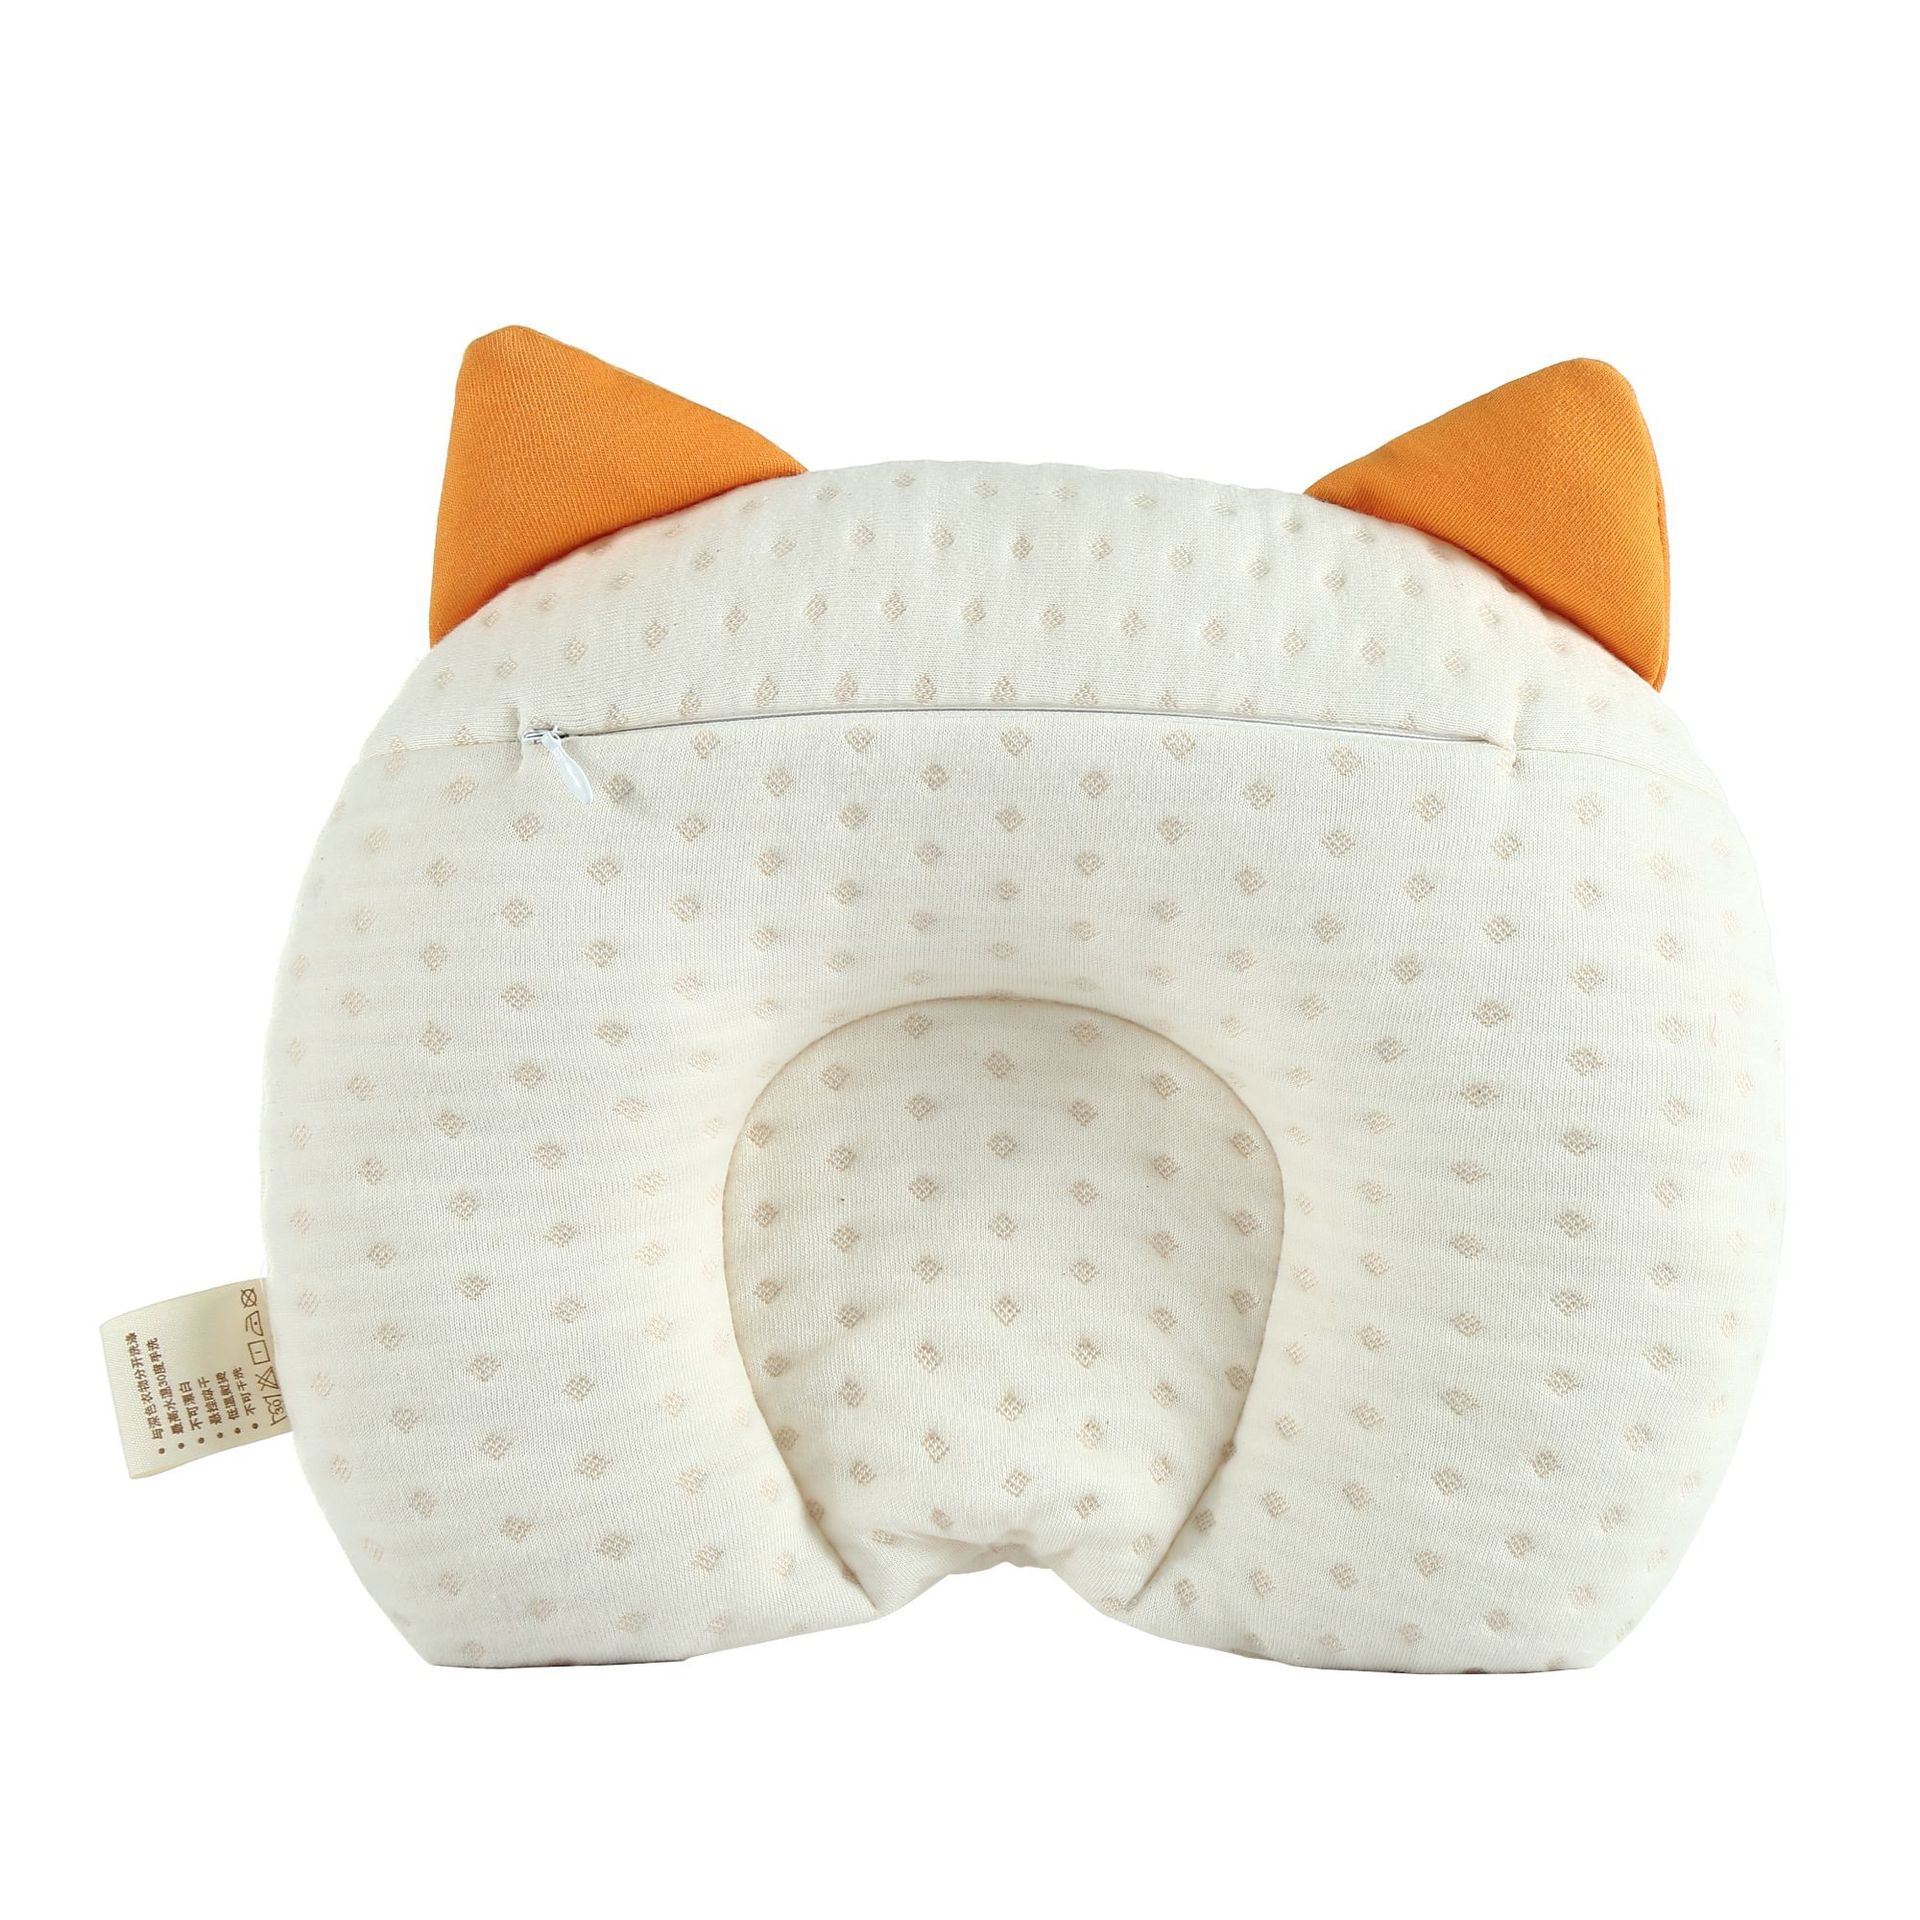 JJOVCE新生儿心形定型枕头婴儿塑形枕头 防偏头枕头0.1KG23*26-阿里巴巴